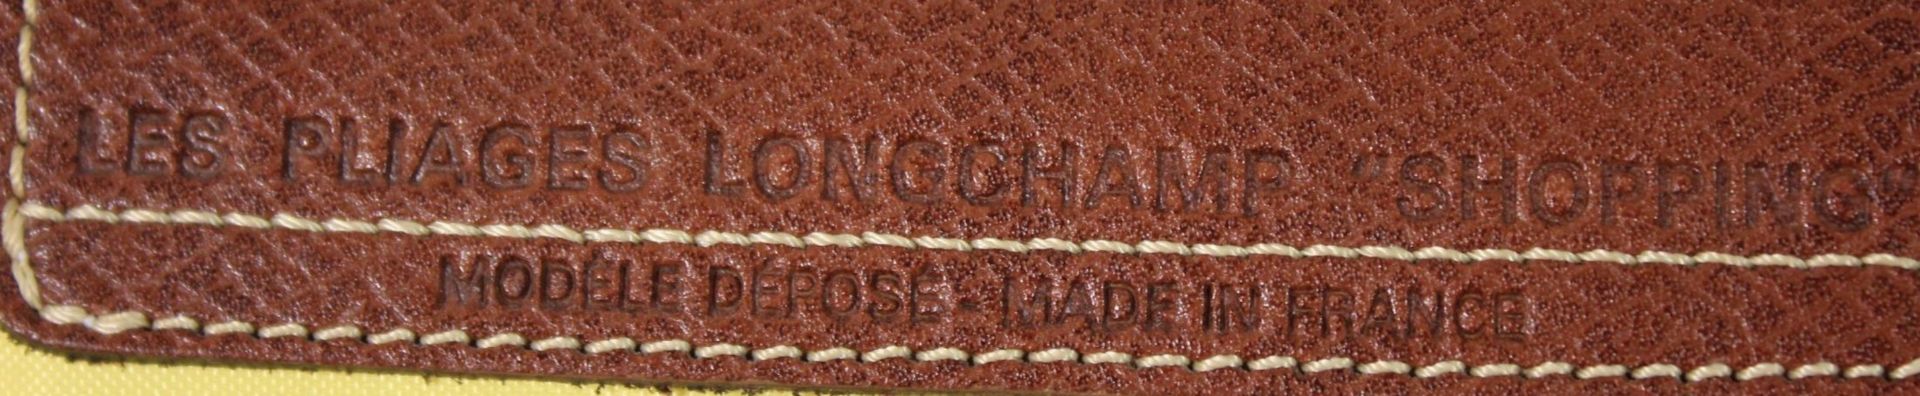 Longchamp-Tasche, neuwertig, ca. 25 x 30cm.  - Bild 6 aus 6